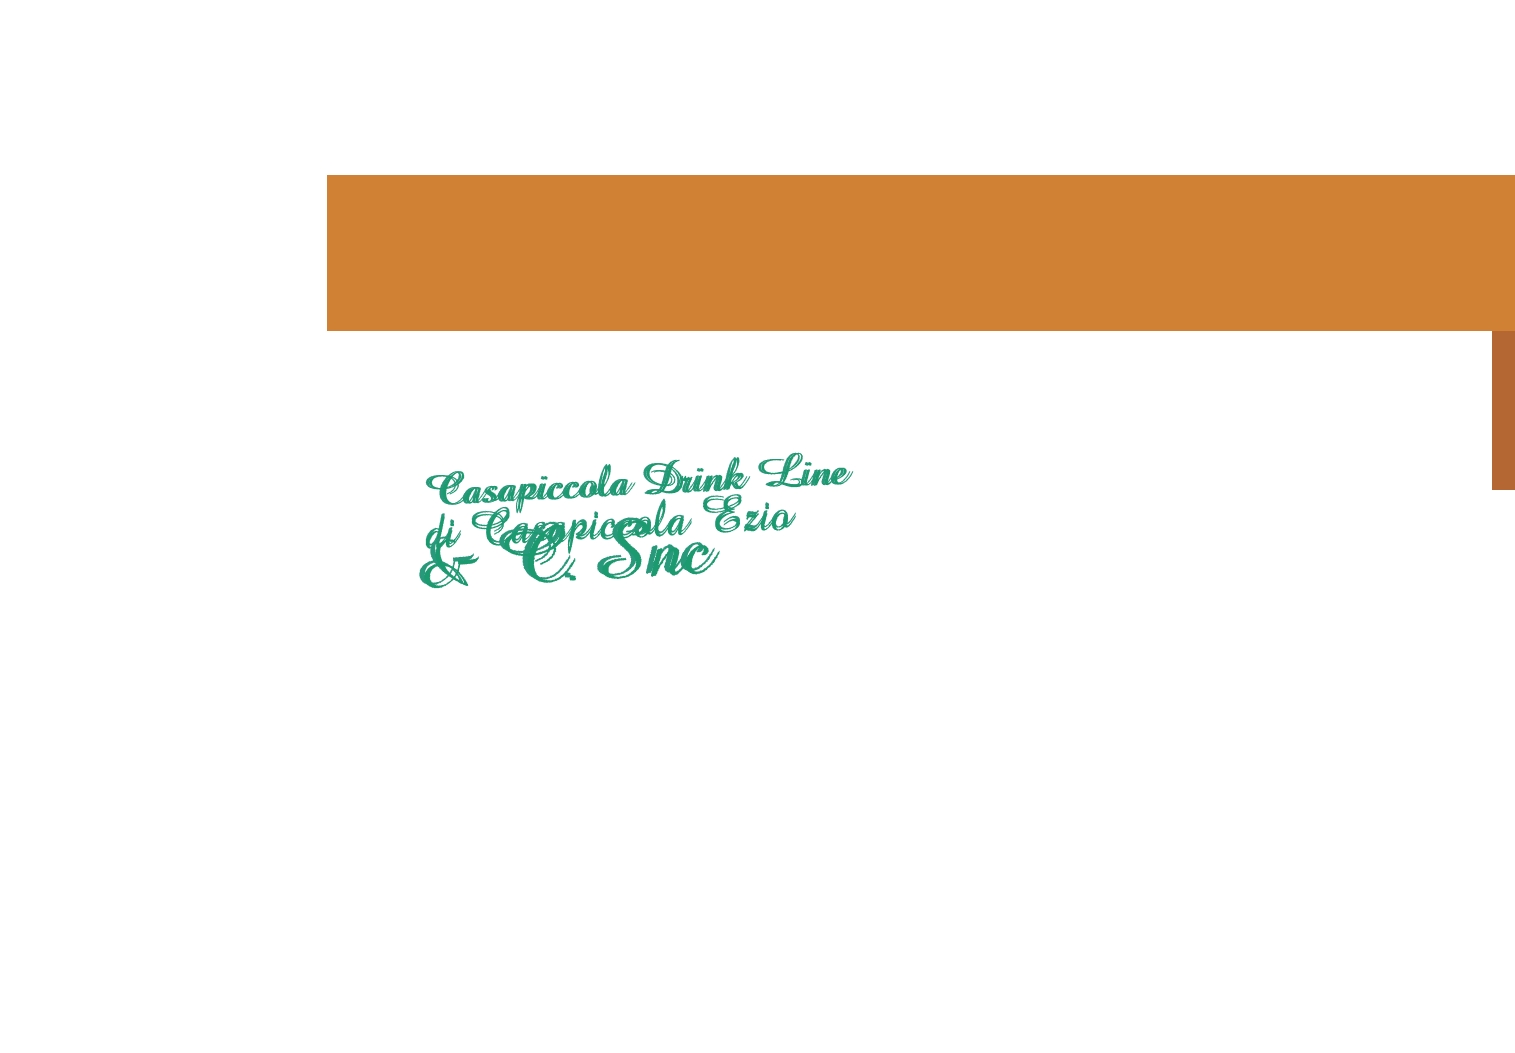 logo Casapiccola Drink Line di Casapiccola Ezio & C. Snc